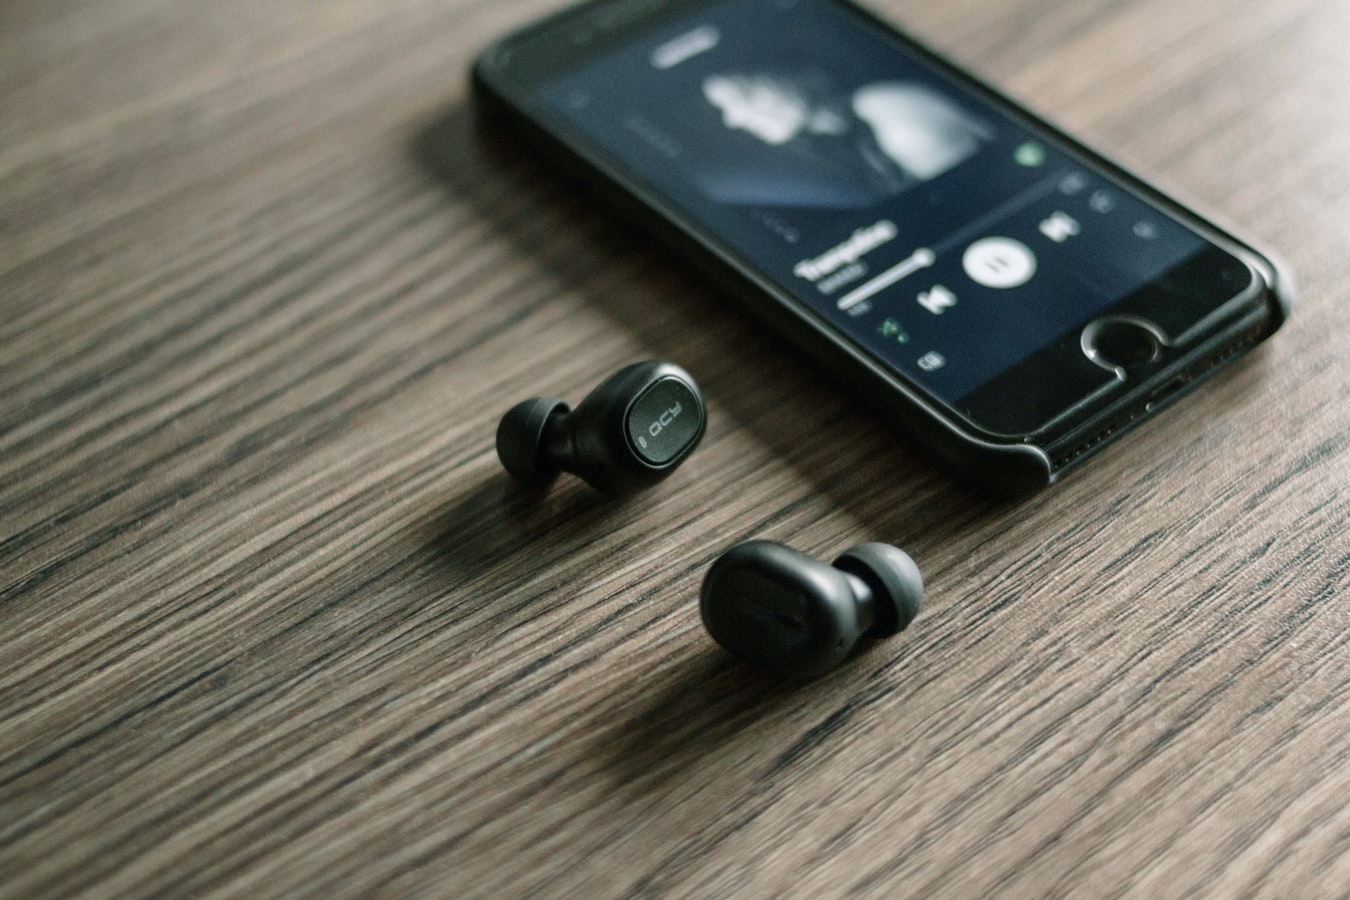 Music streaming leads impressive 2020 growth in audio despite COVID’s drawbacks